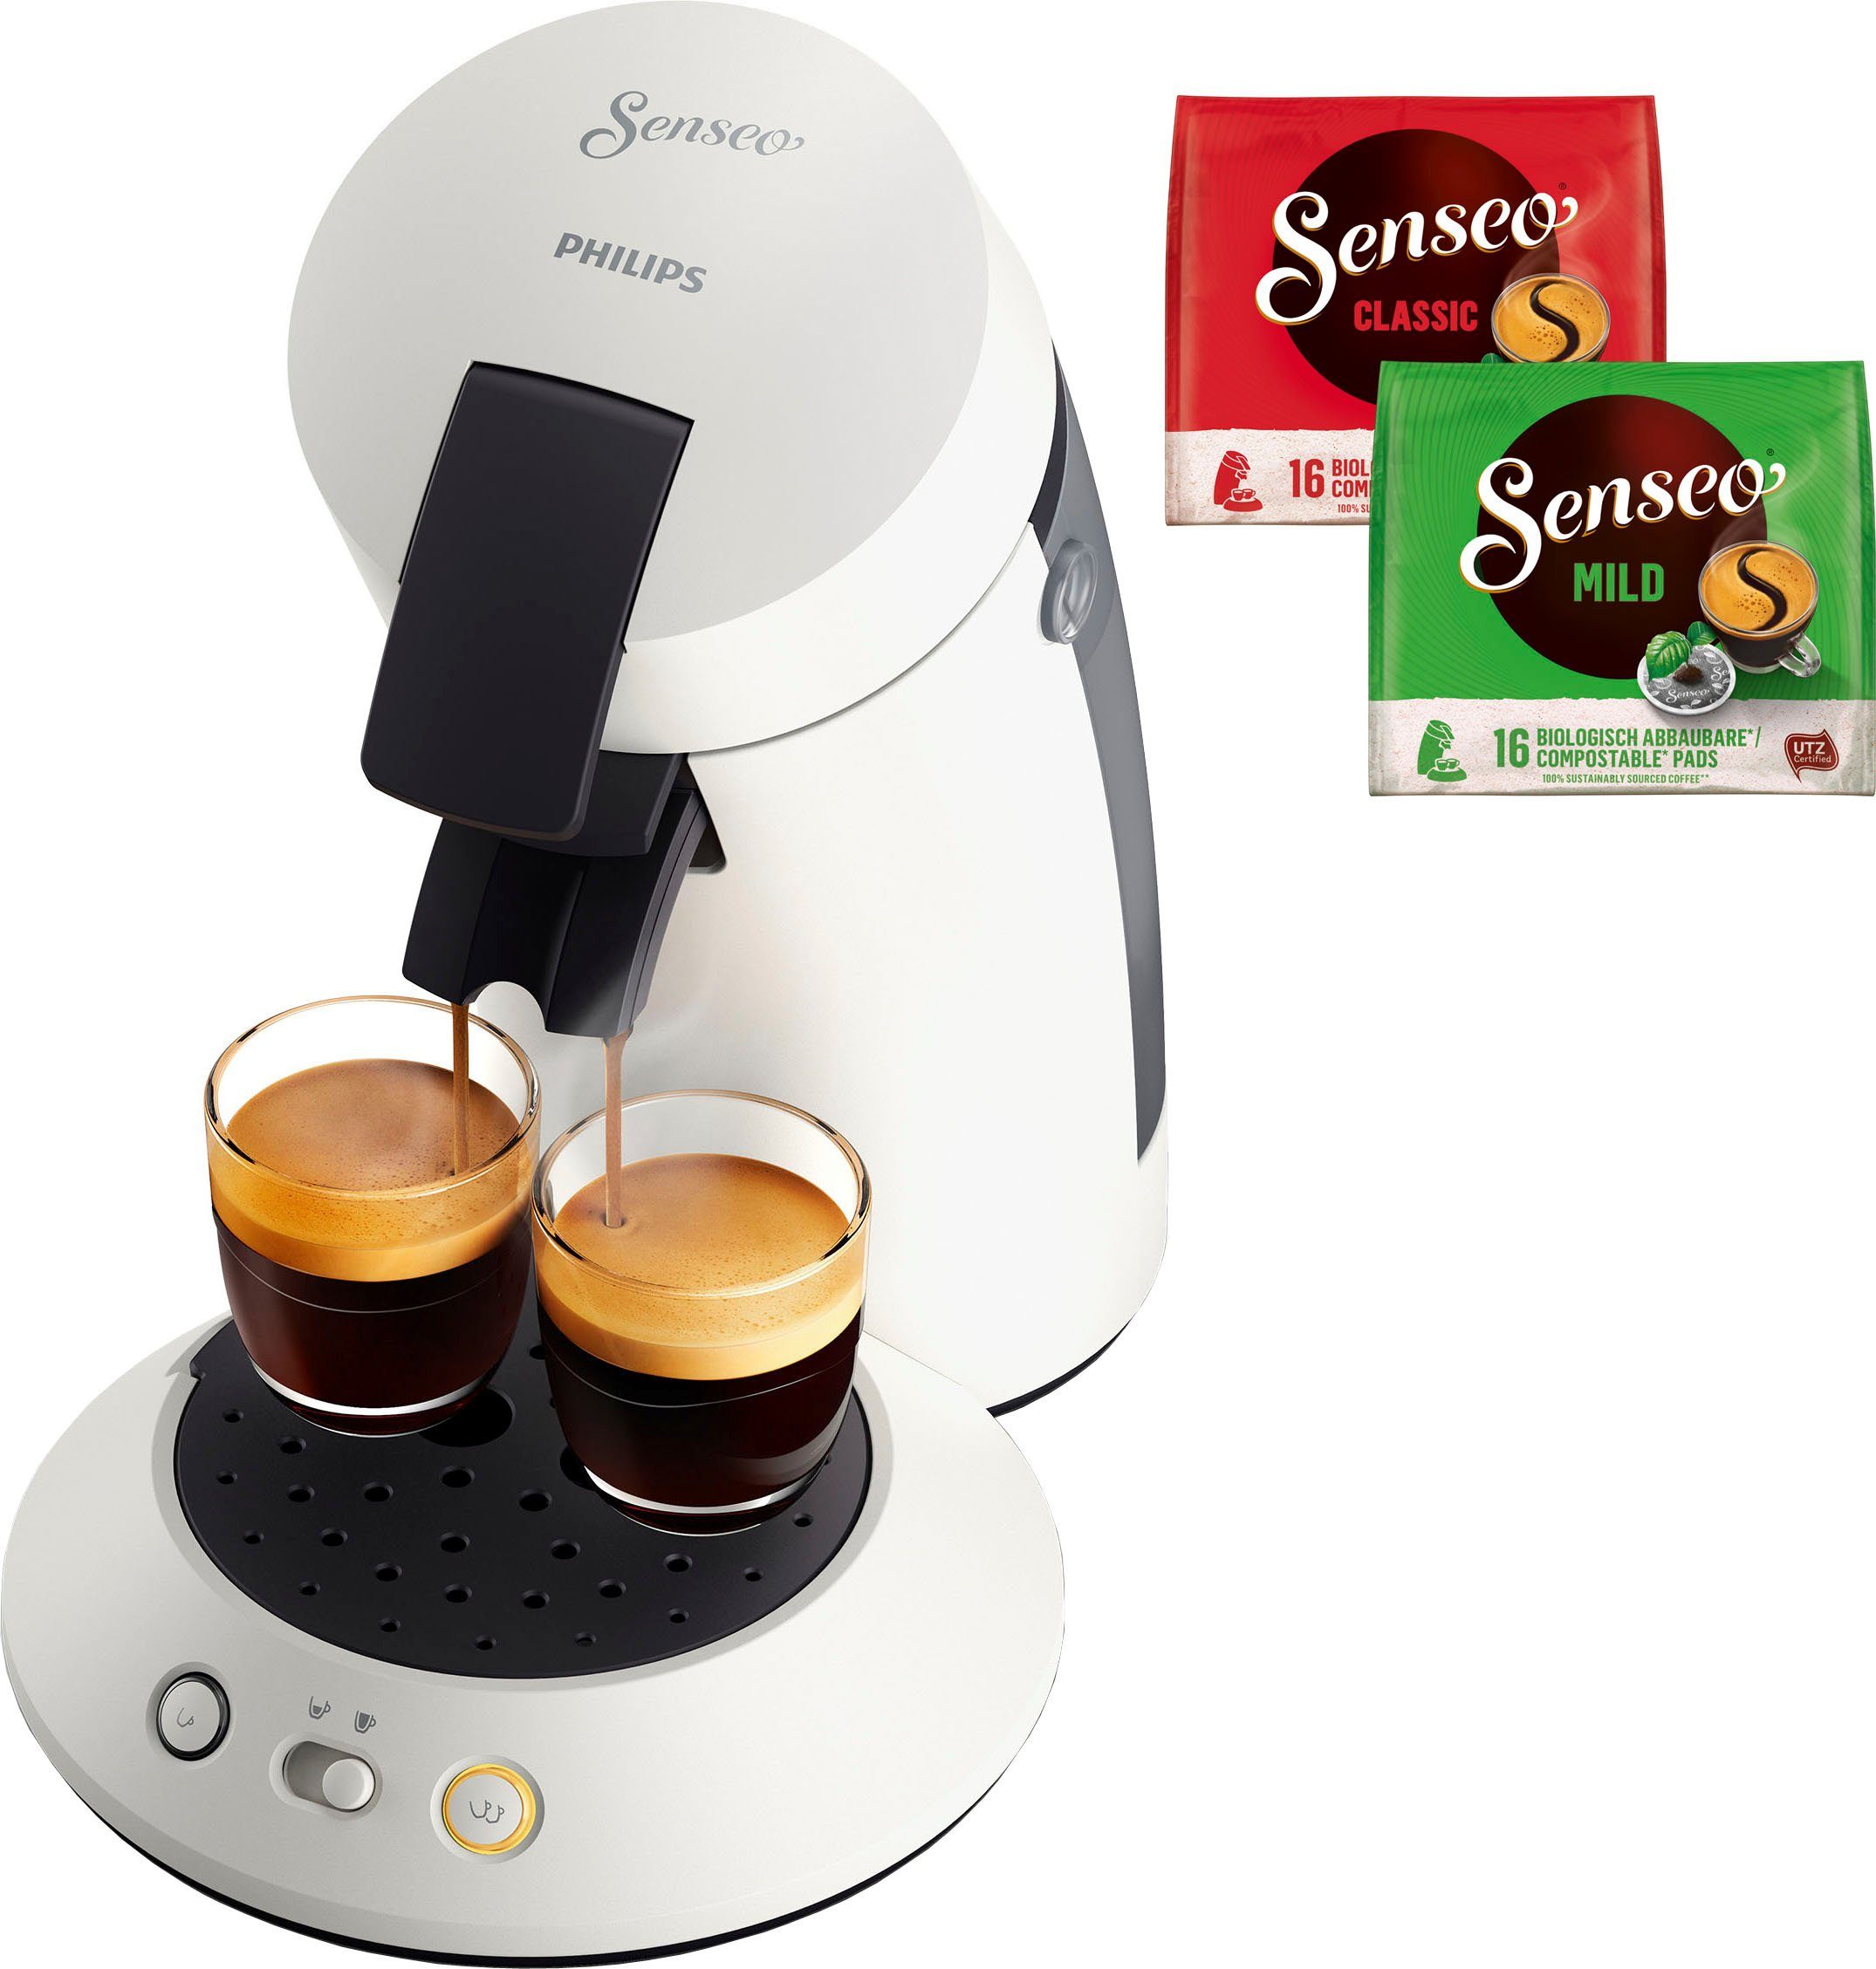 +3 Memo-Funktion, Senseo Plus Kaffeespezialitäten, (Wert Kaffeepadmaschine Gratis-Zugaben aus Plastik, recyceltem 80% €5,-UVP) CSA210/10, Original Philips